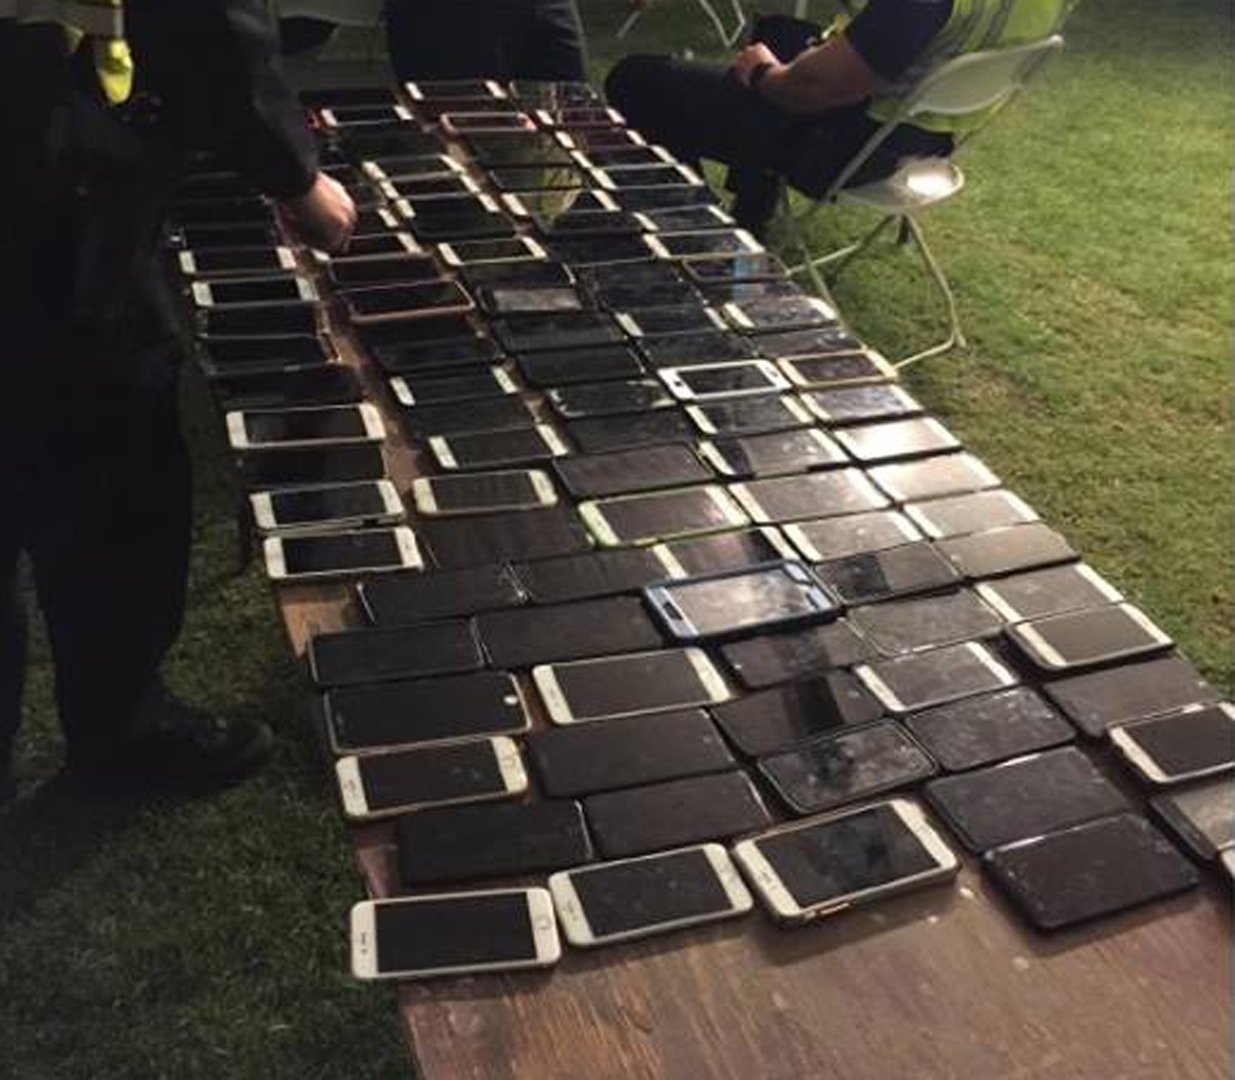 Stolen phones at Coachella Festival